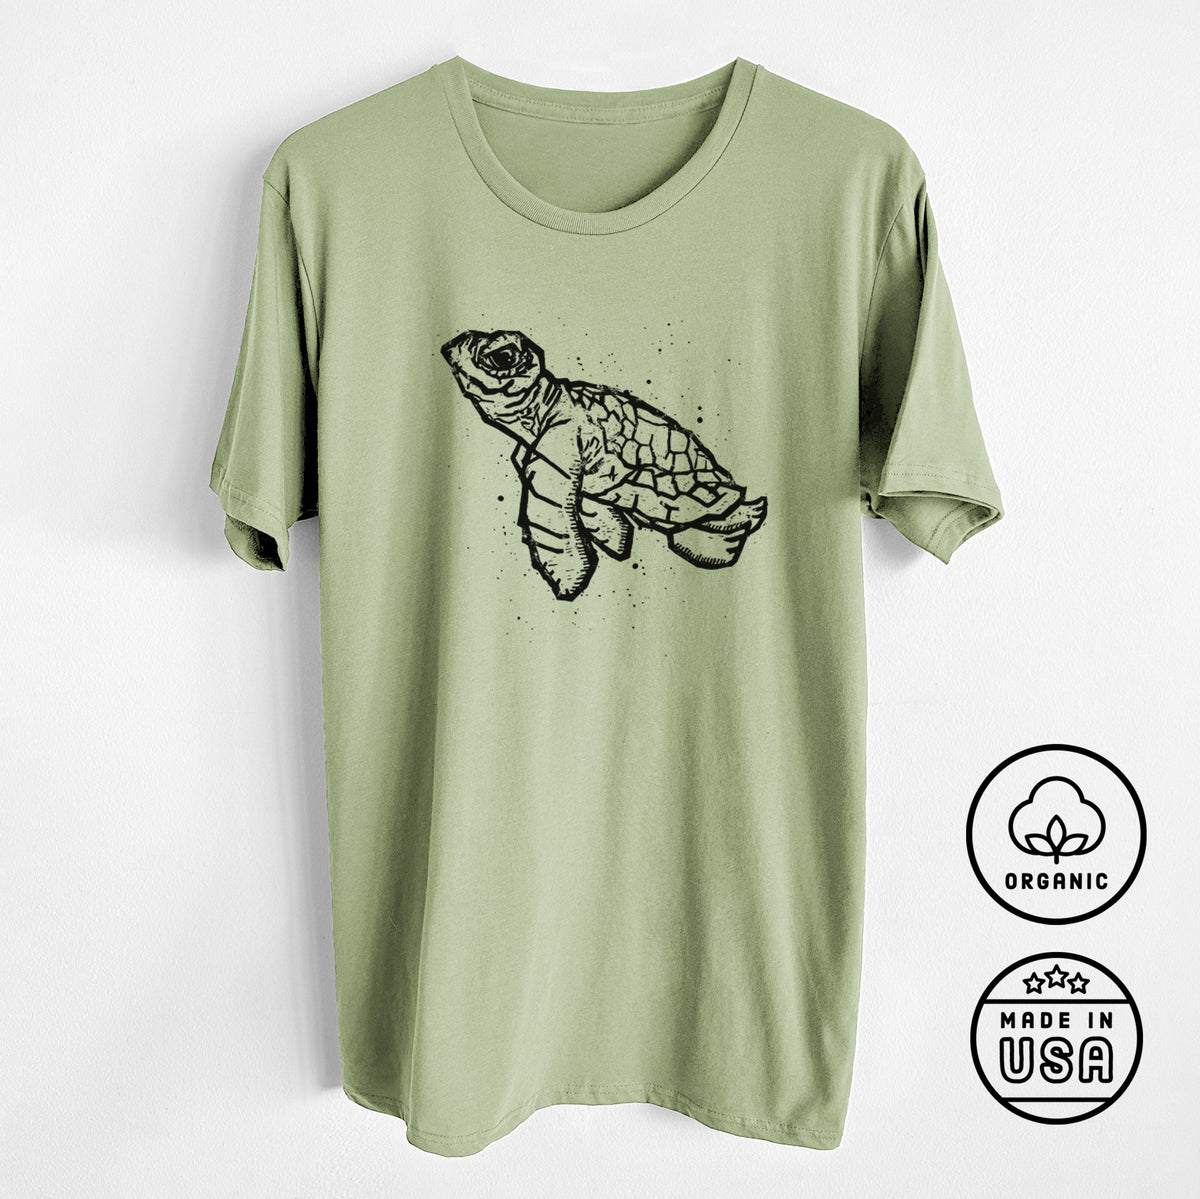 Baby Sea Turtle - Unisex Crewneck - Made in USA - 100% Organic Cotton